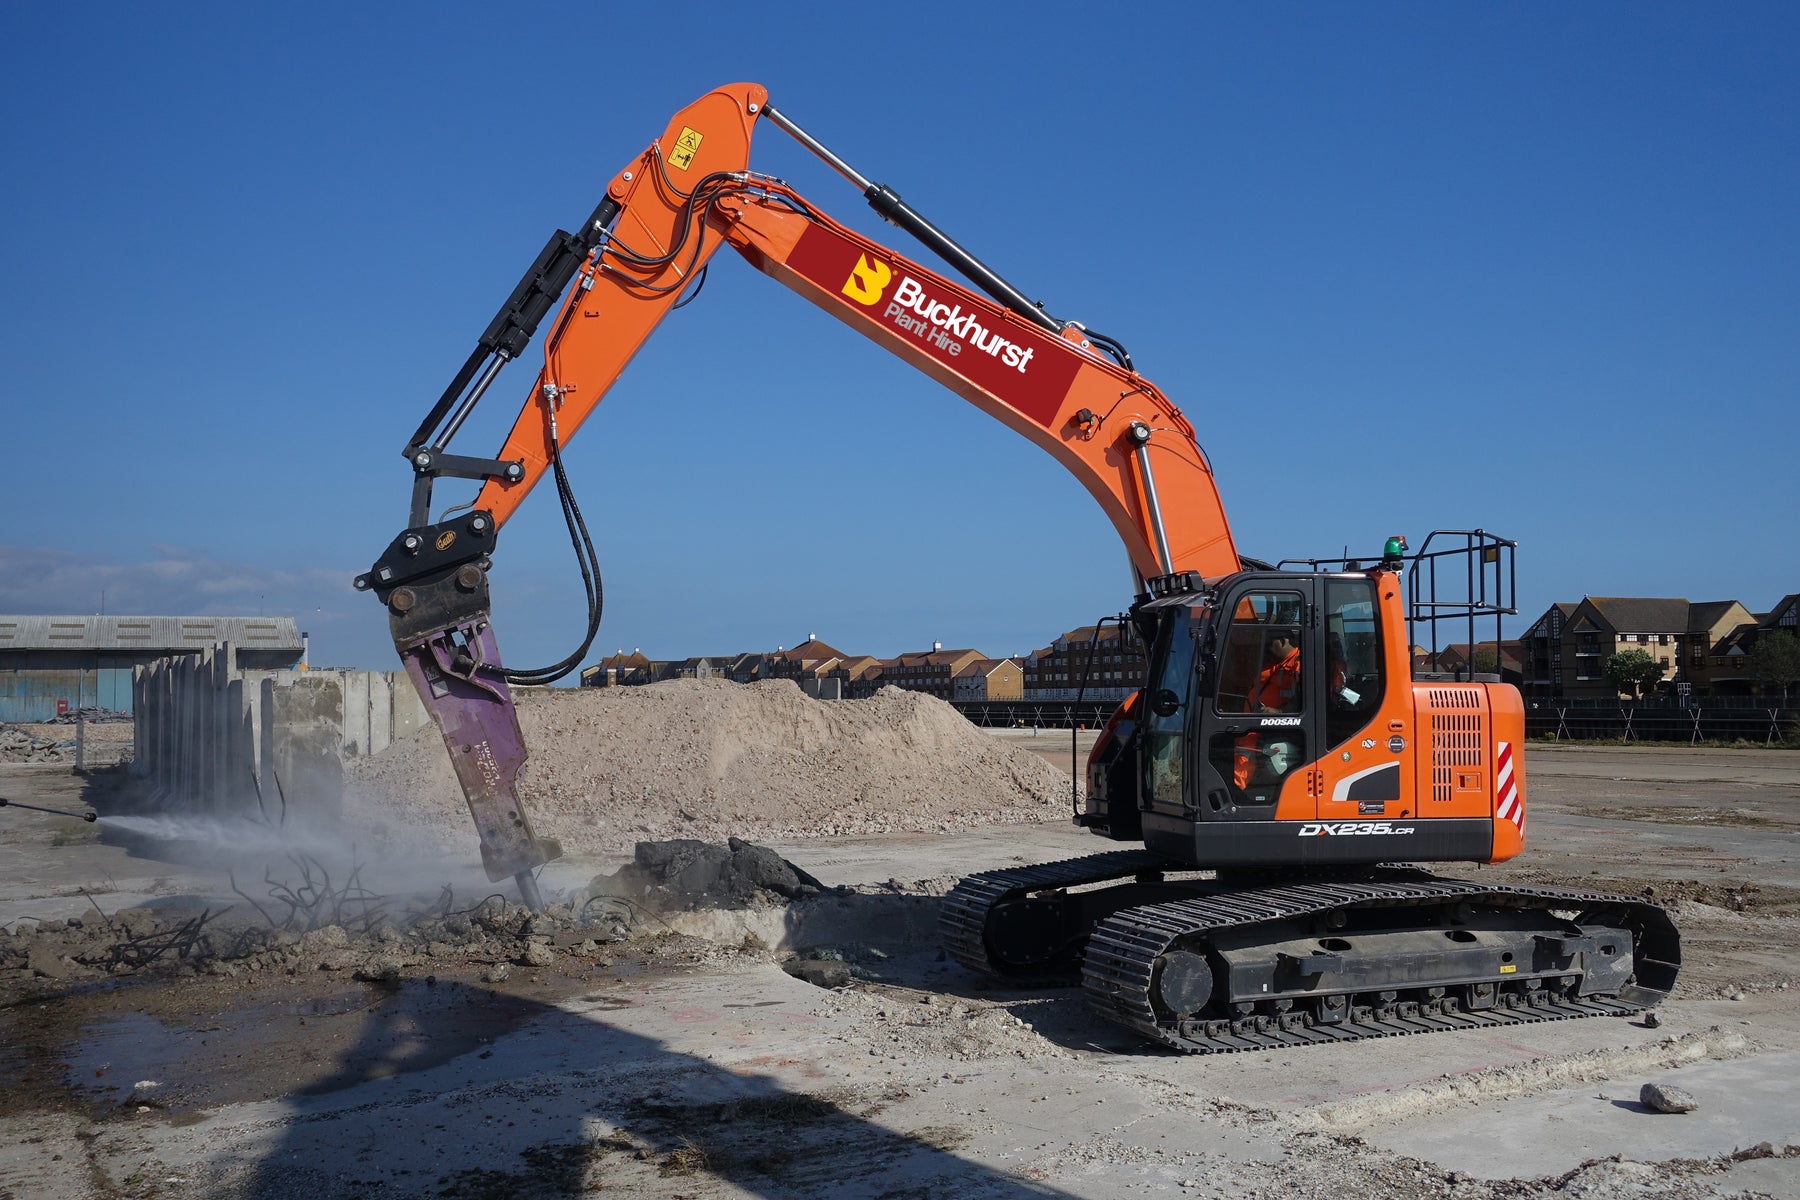 £3 Million Pound Investment into Excavator Range